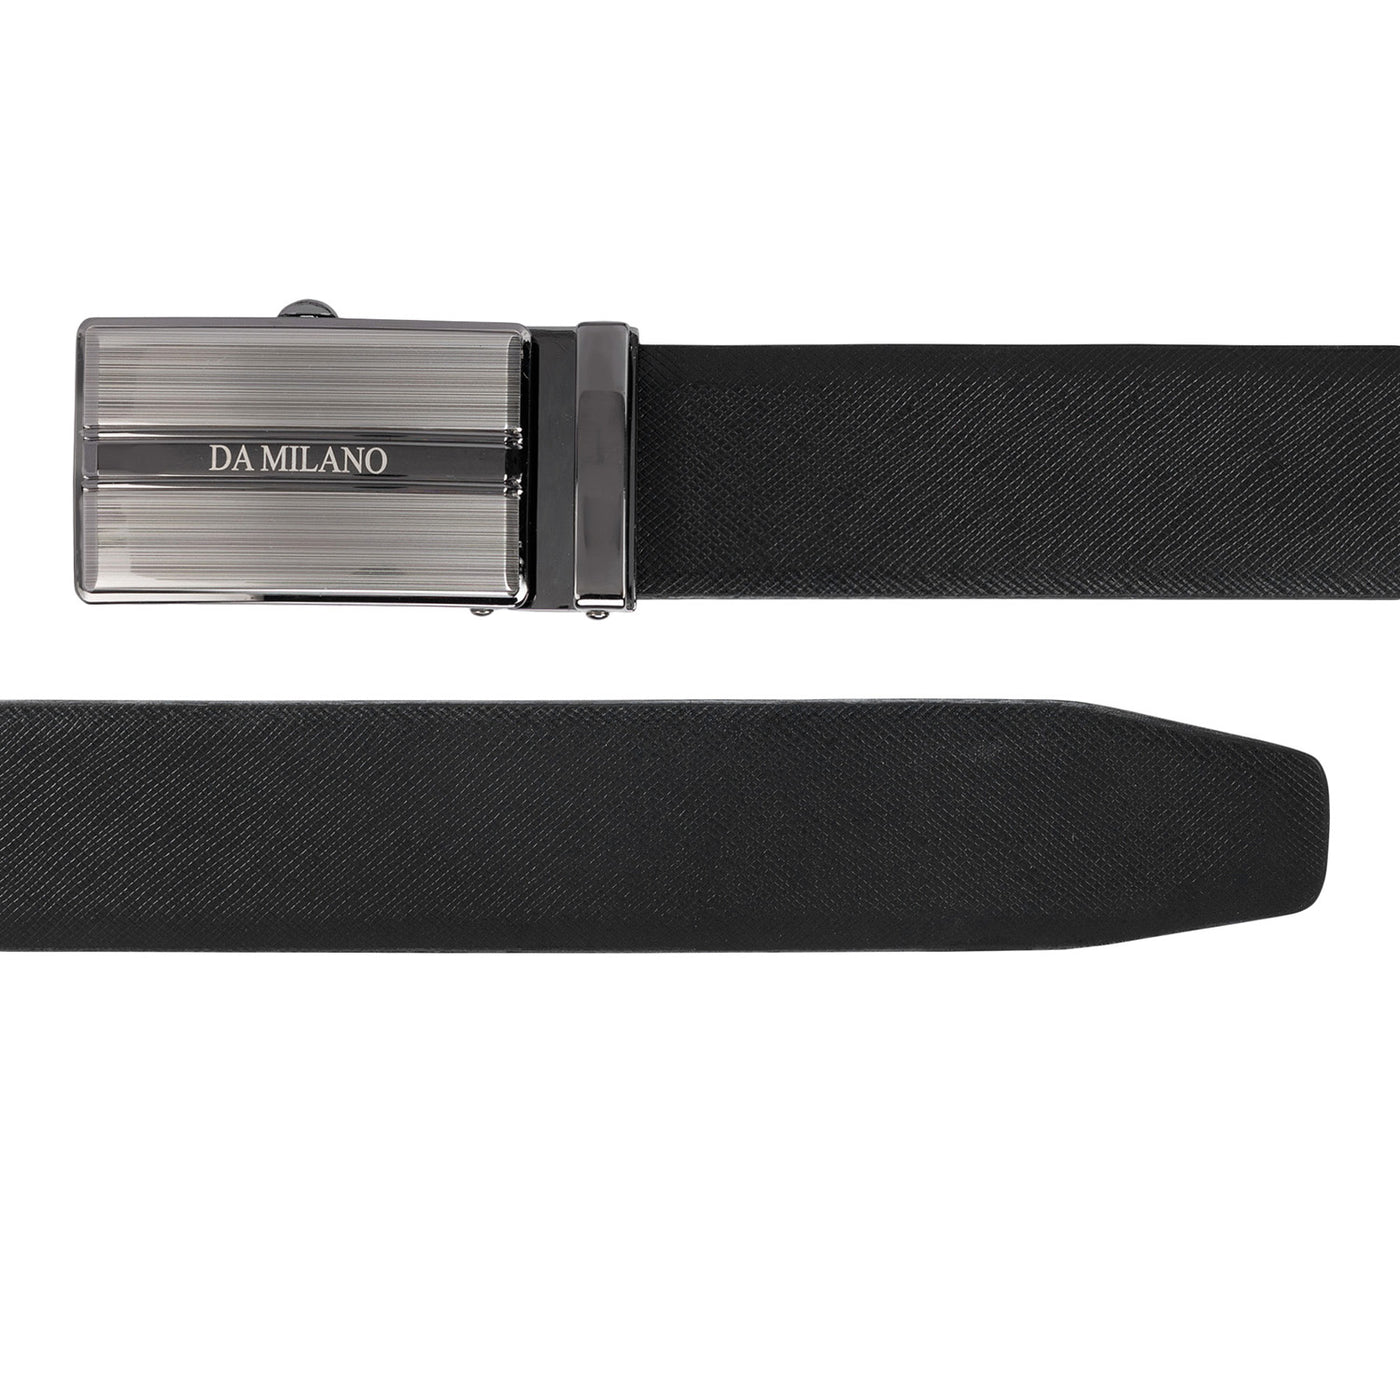 Casual Saffiano Leather Mens Belt - Black